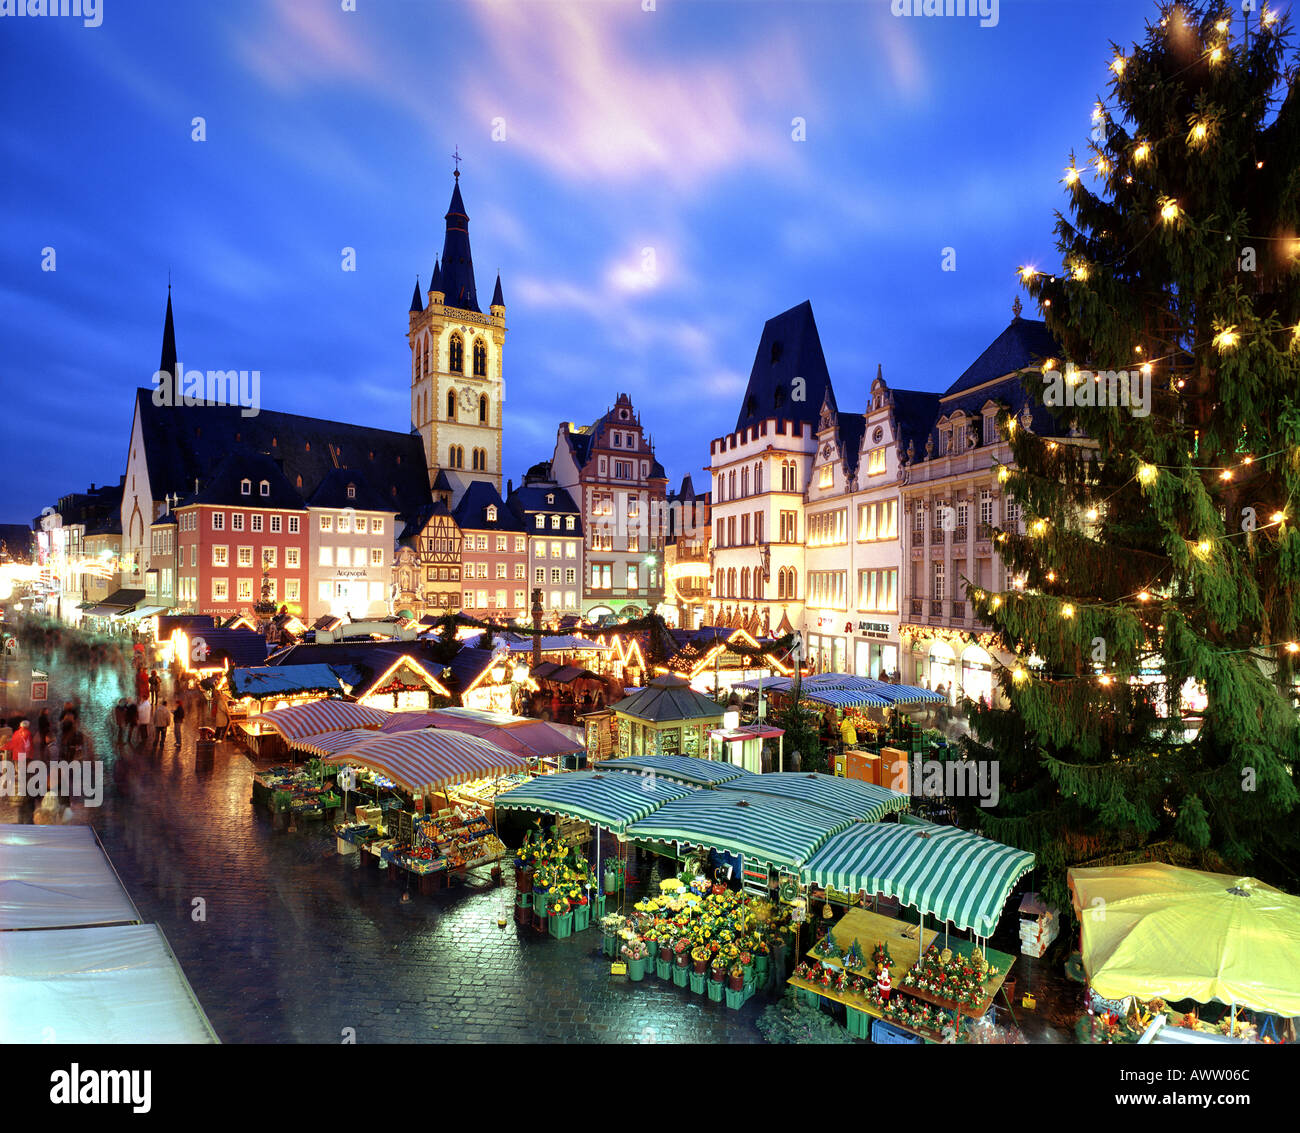 DE - Renania Palatinato: Mercatino di Natale a Treviri Foto Stock